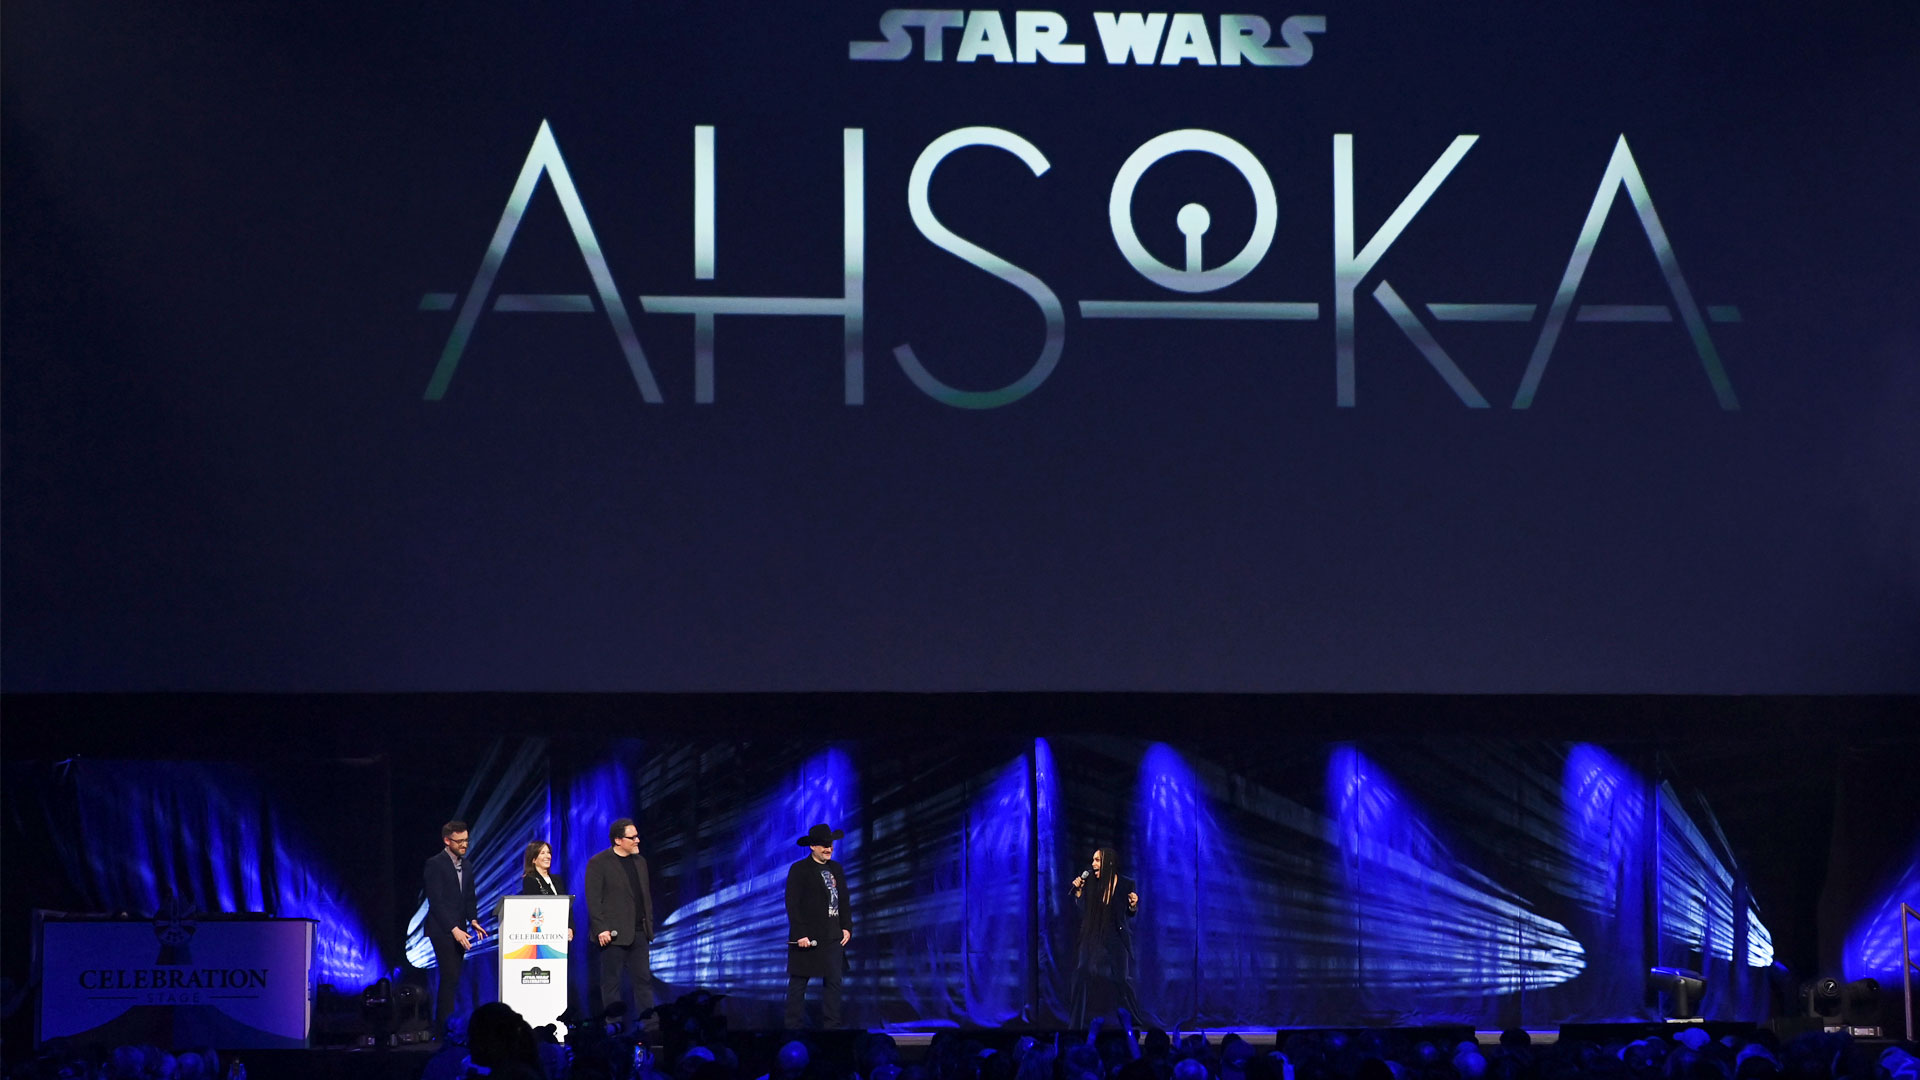 Andor Season 2 (2024), Teaser Trailer, Star Wars & Disney+ (4K)